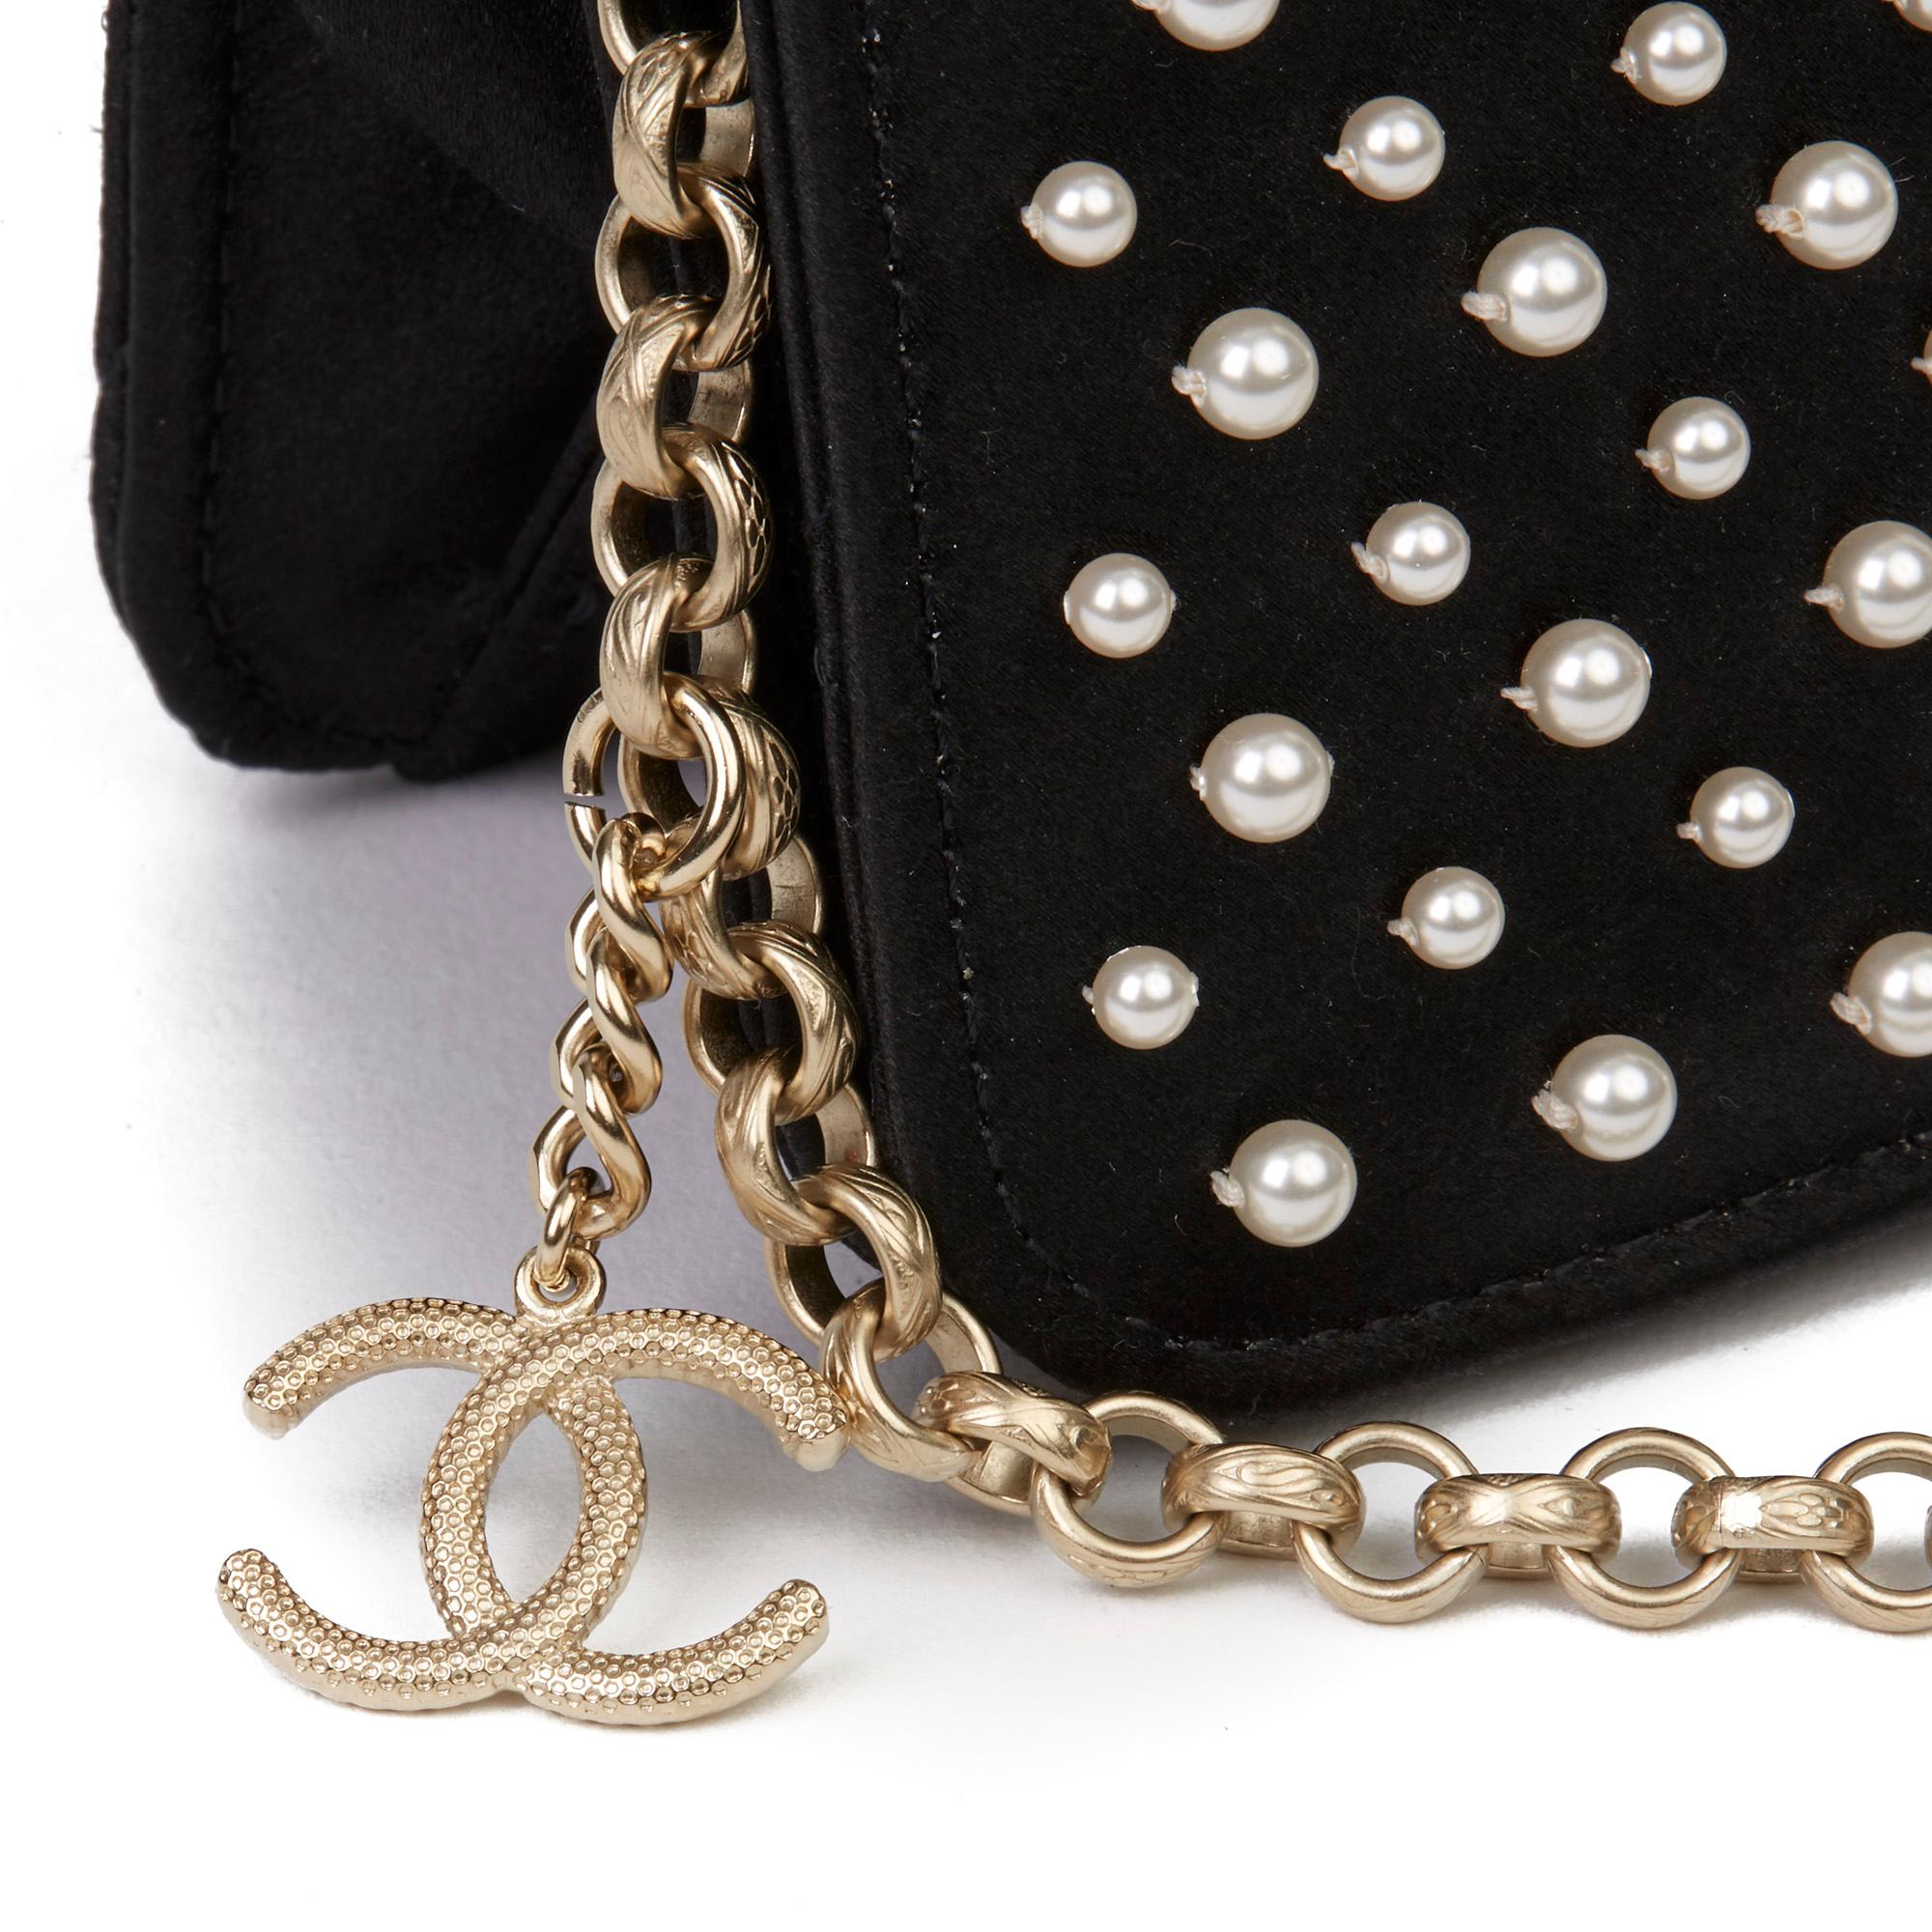 2016 Chanel Black Embellished Quilted Satin Pearl Flap Bag 2